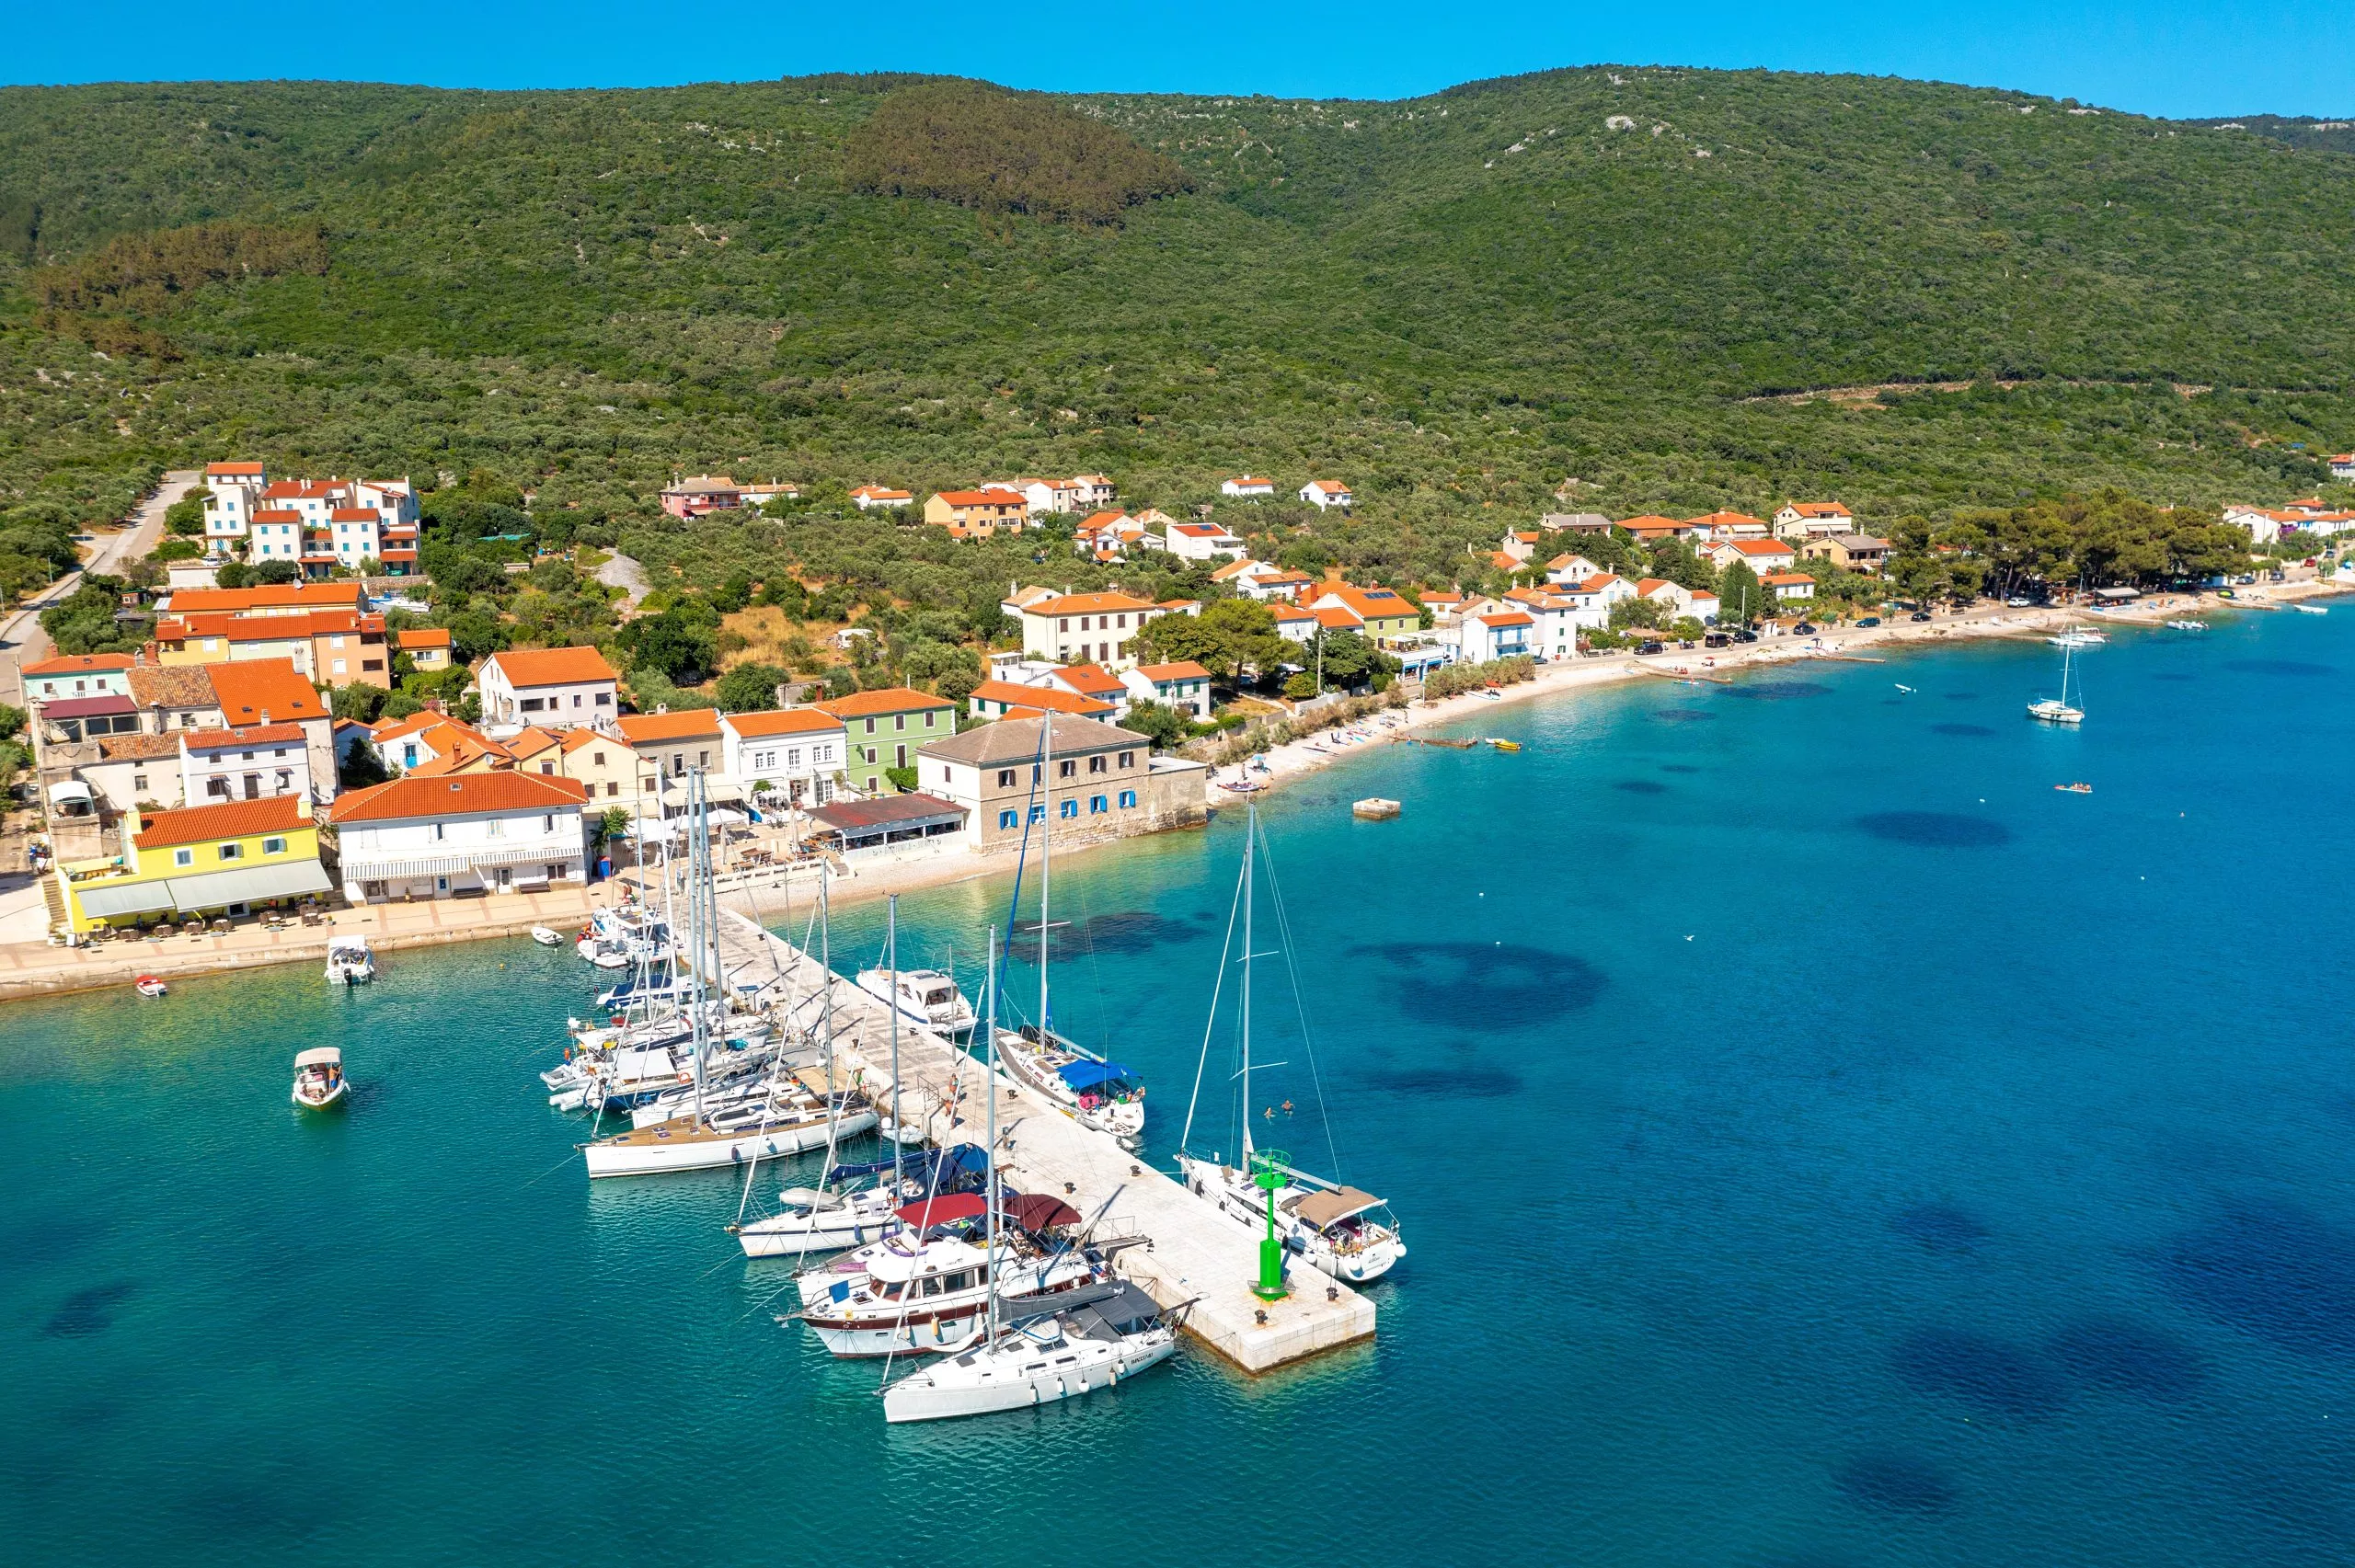 Aerial view of Martinšćica, a town in Cres Island, the Adriatic Sea in Croatia